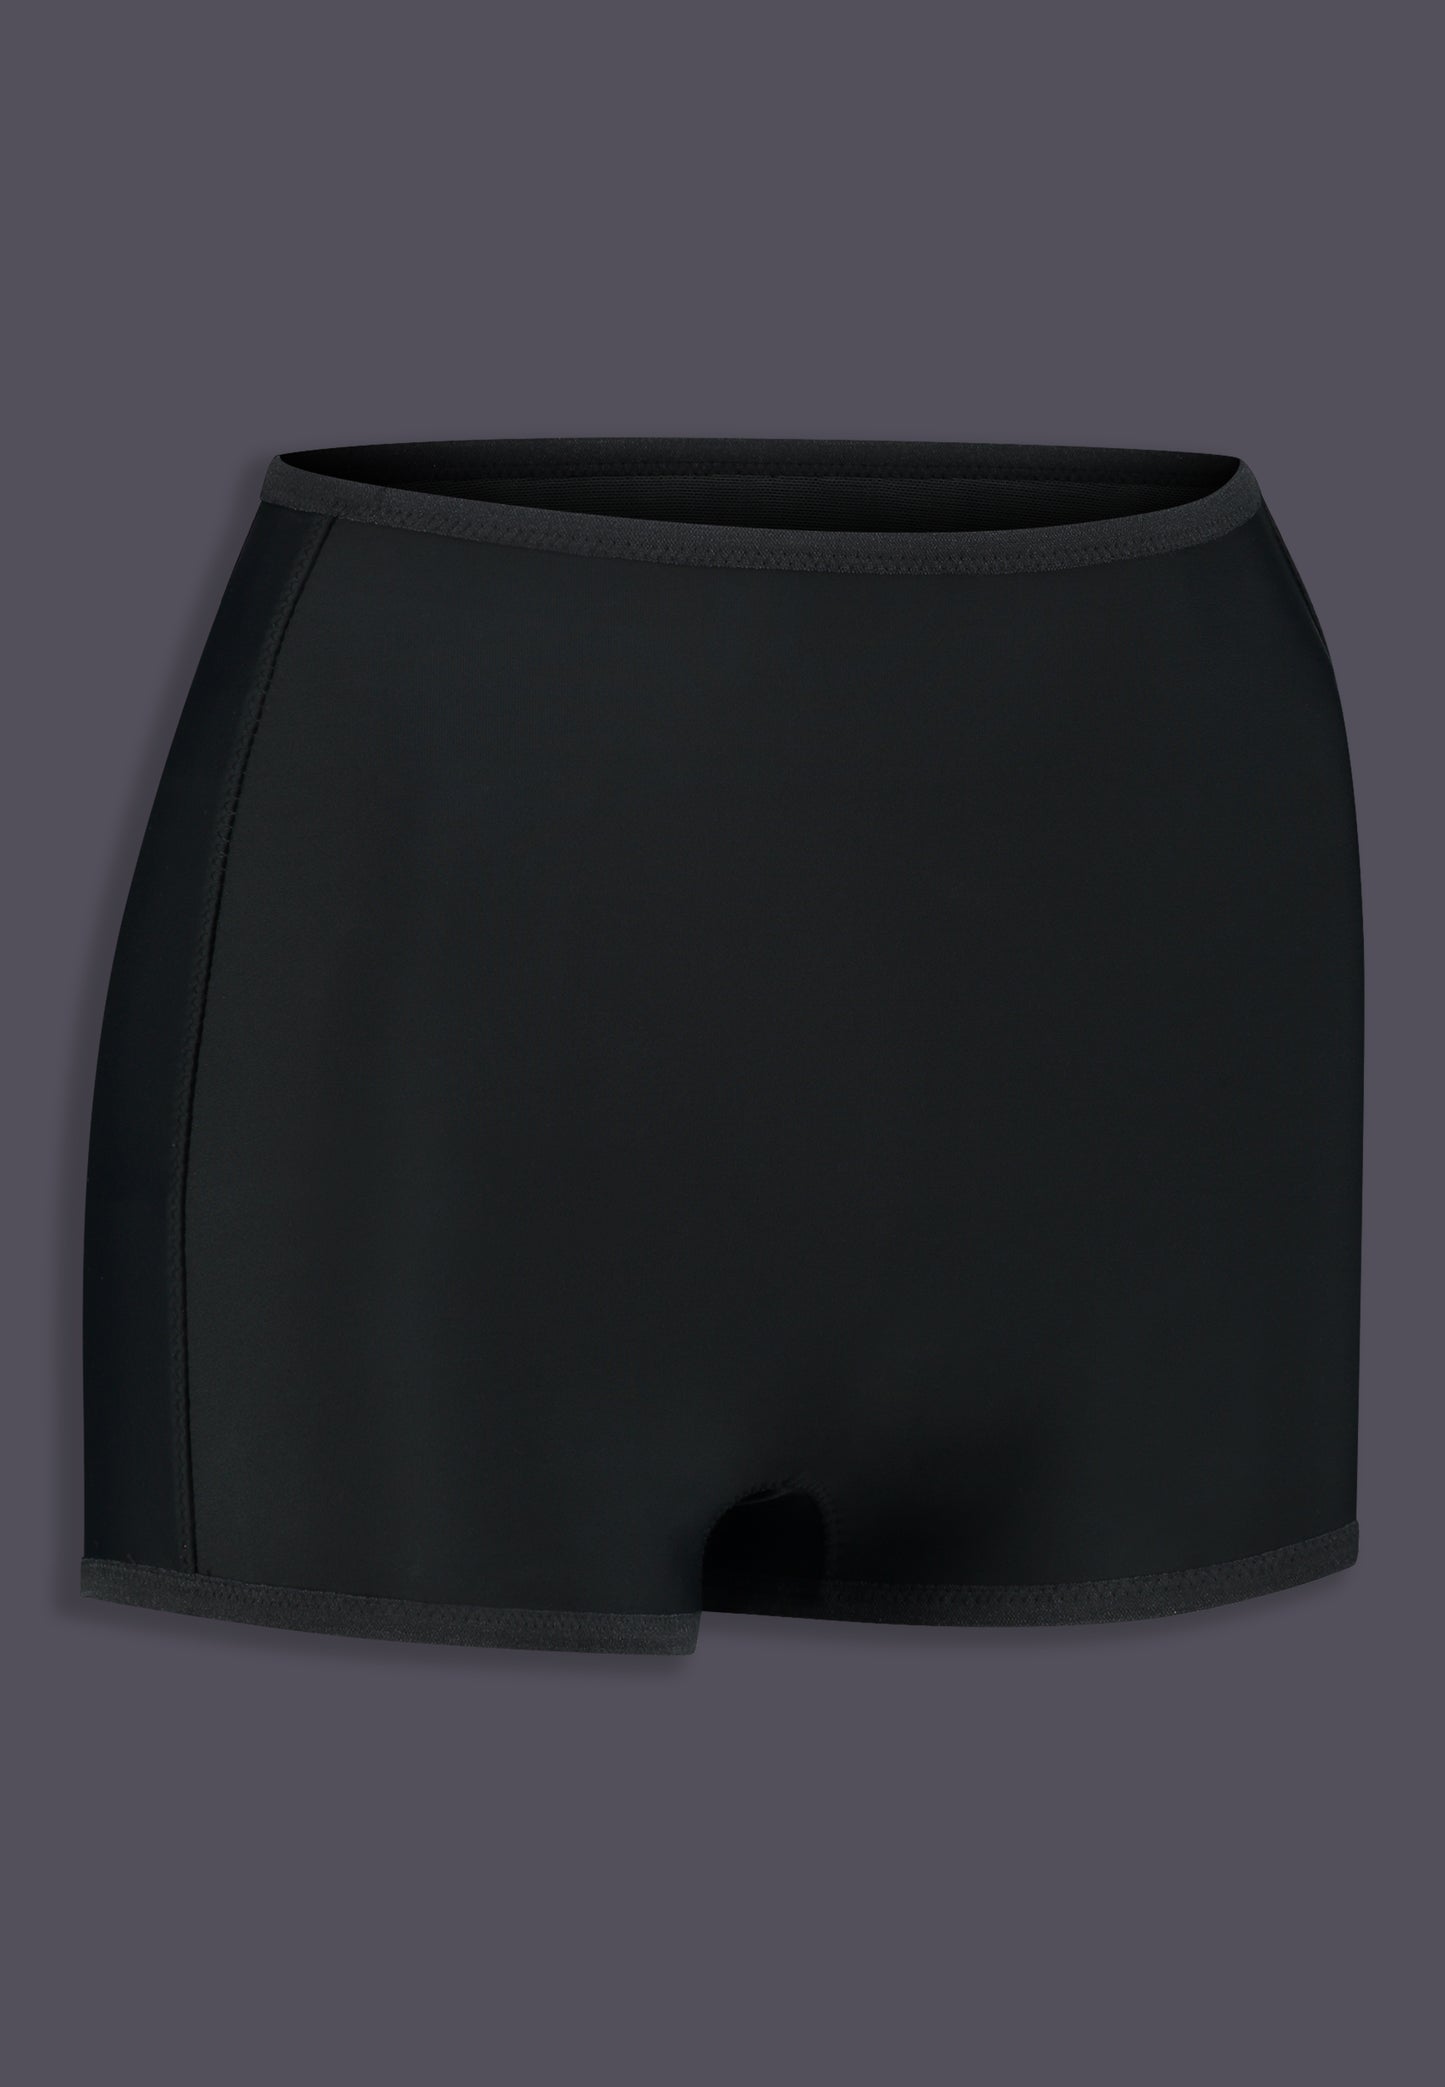 Bikini Short black, side right, product shot by UNTAG